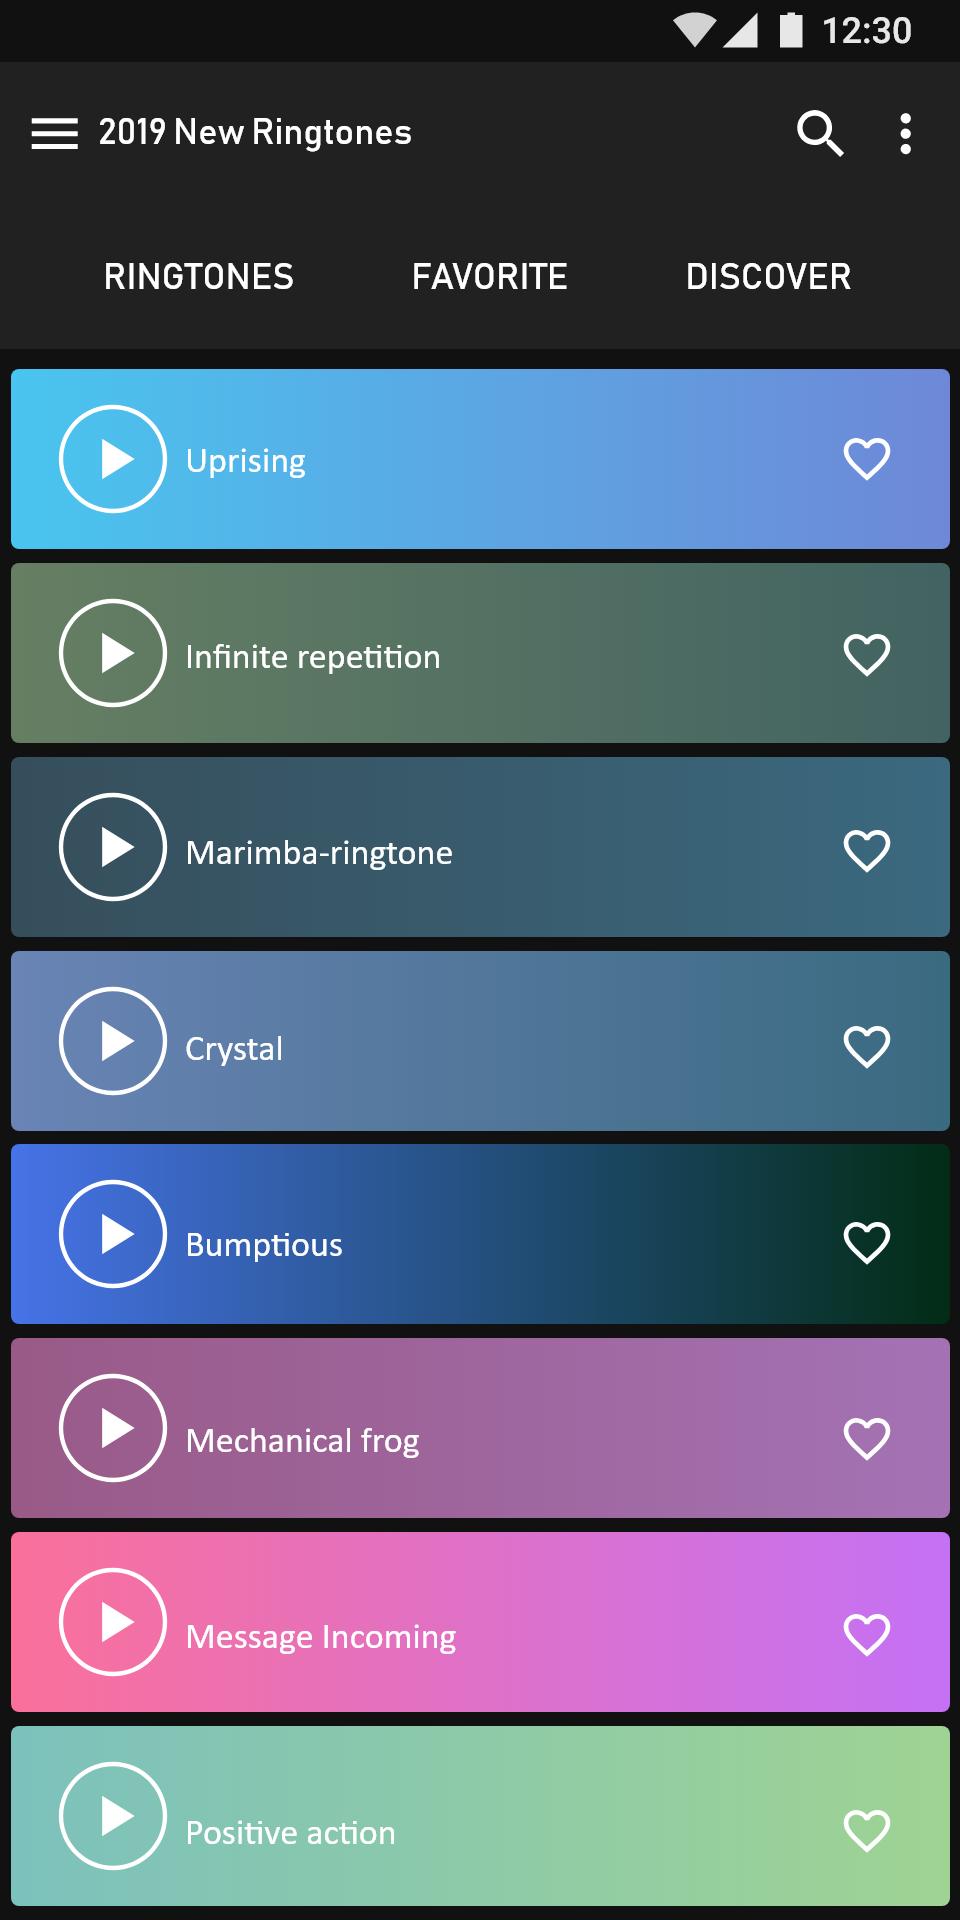 2019 new ringtones-Popular music Mp3 Alarm clock for Android - APK Download